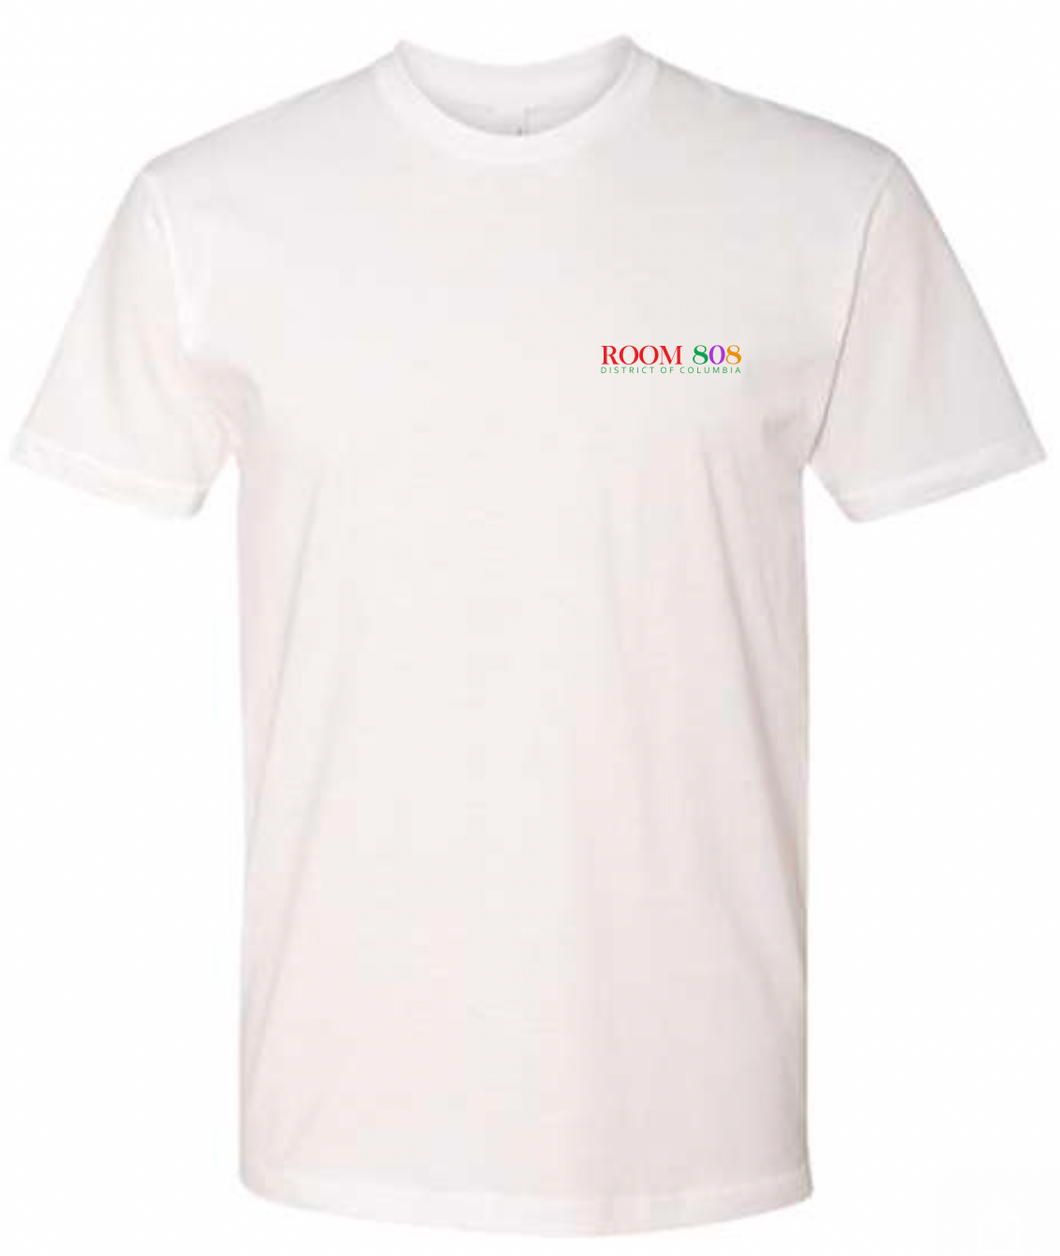 Room 808 T-Shirt [White]